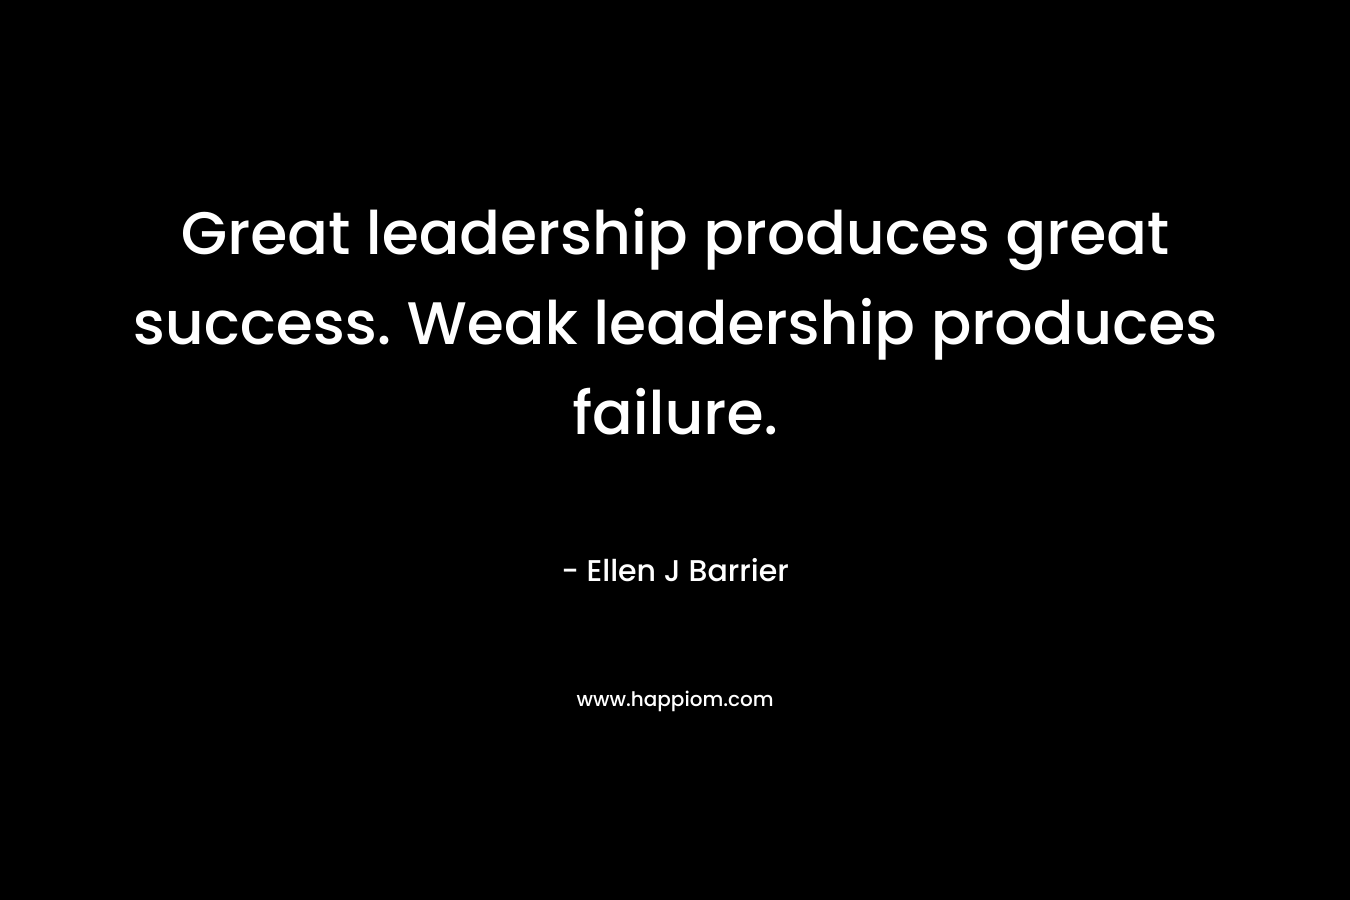 Great leadership produces great success. Weak leadership produces failure.